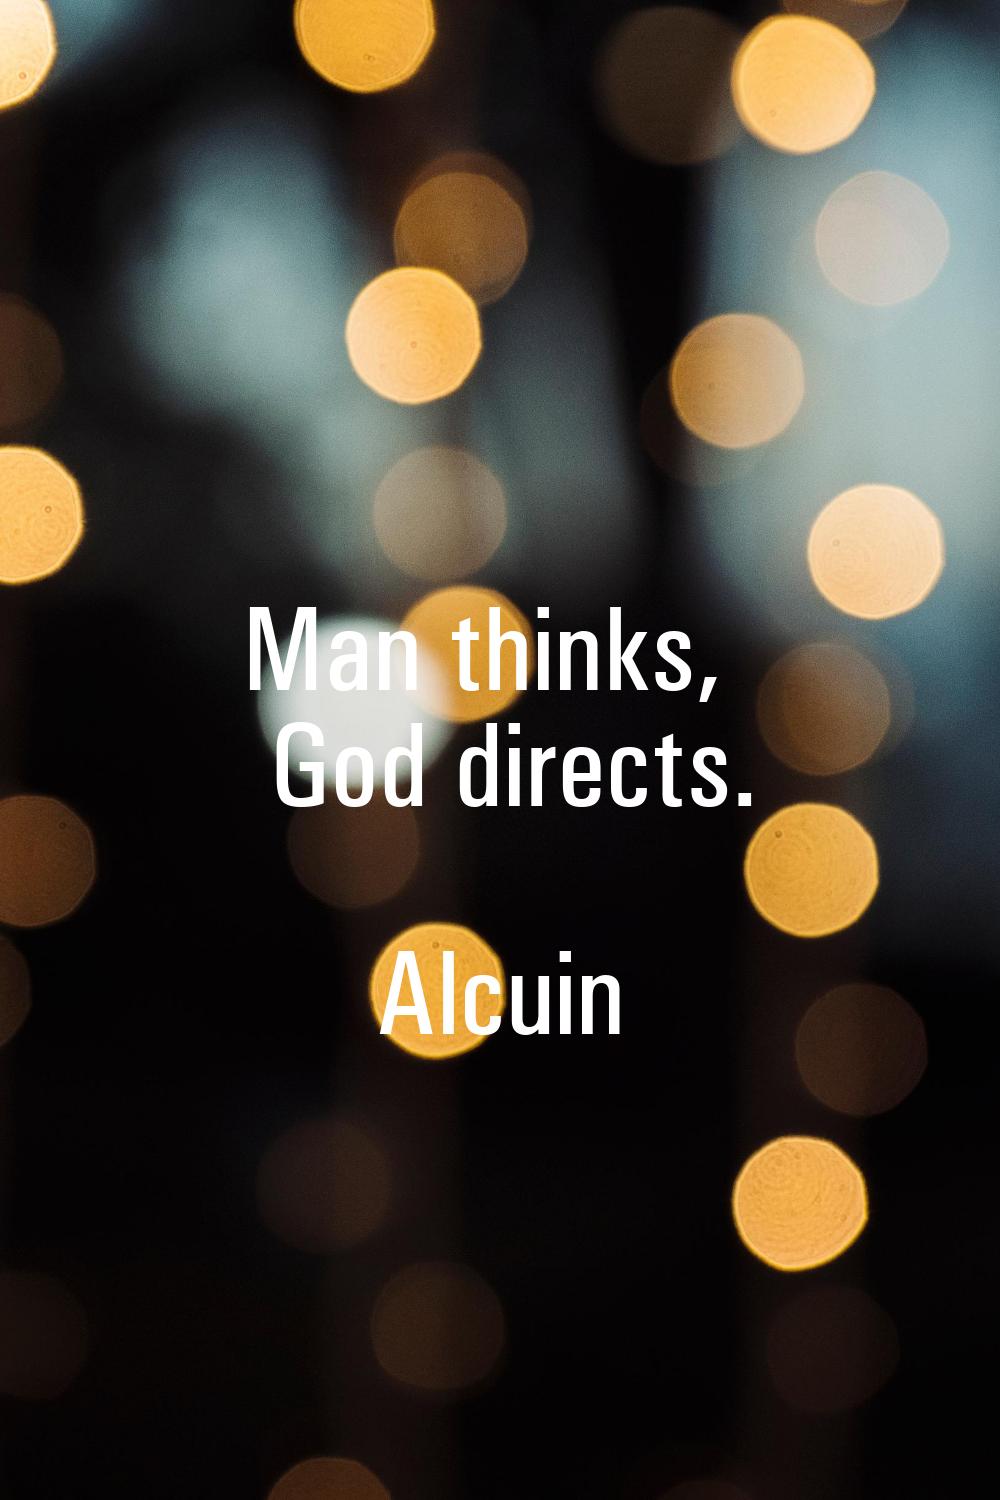 Man thinks, God directs.